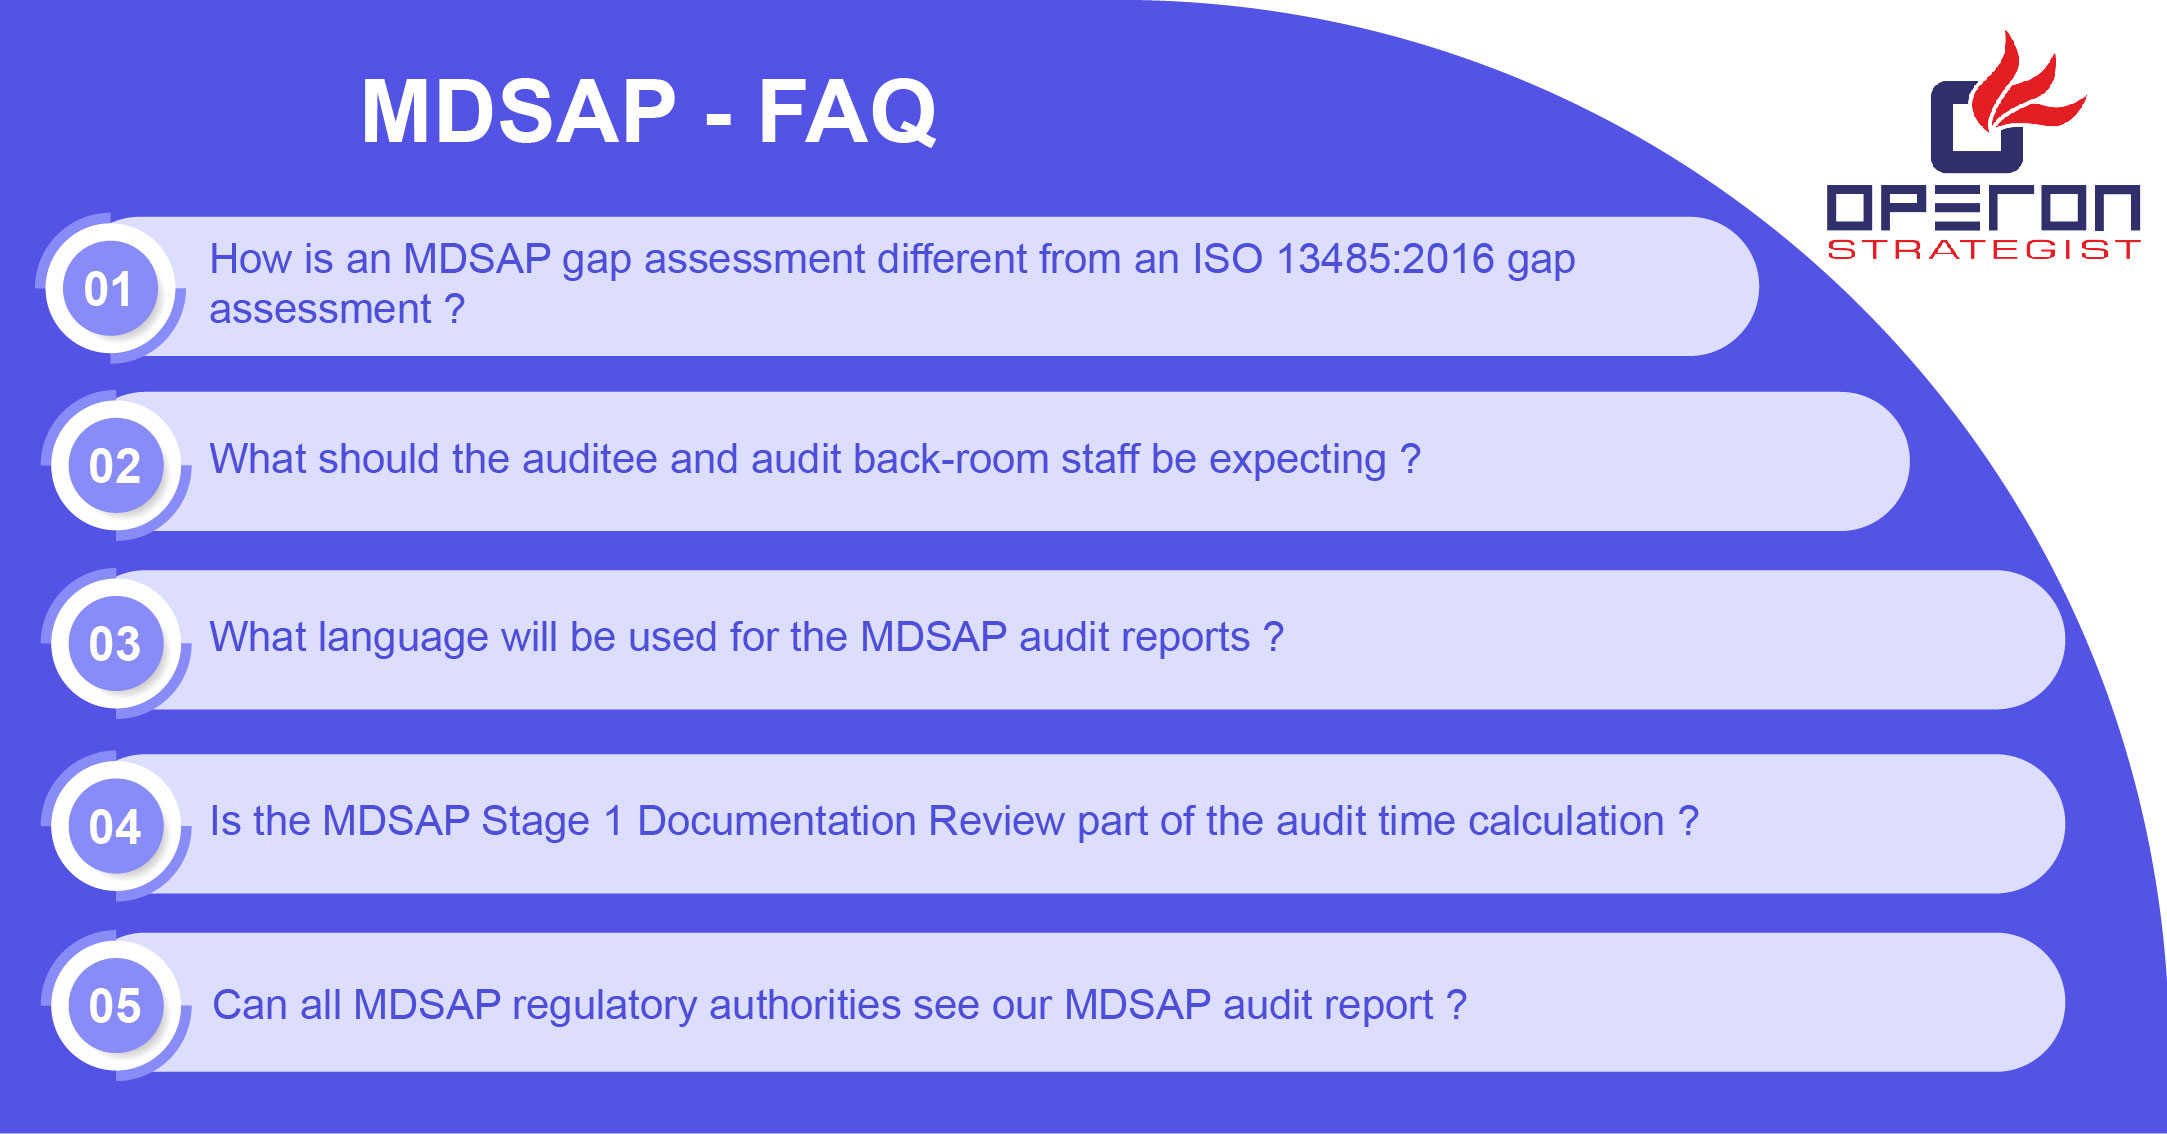 mdsap faq trial balance practice assets and liabilities on sheet